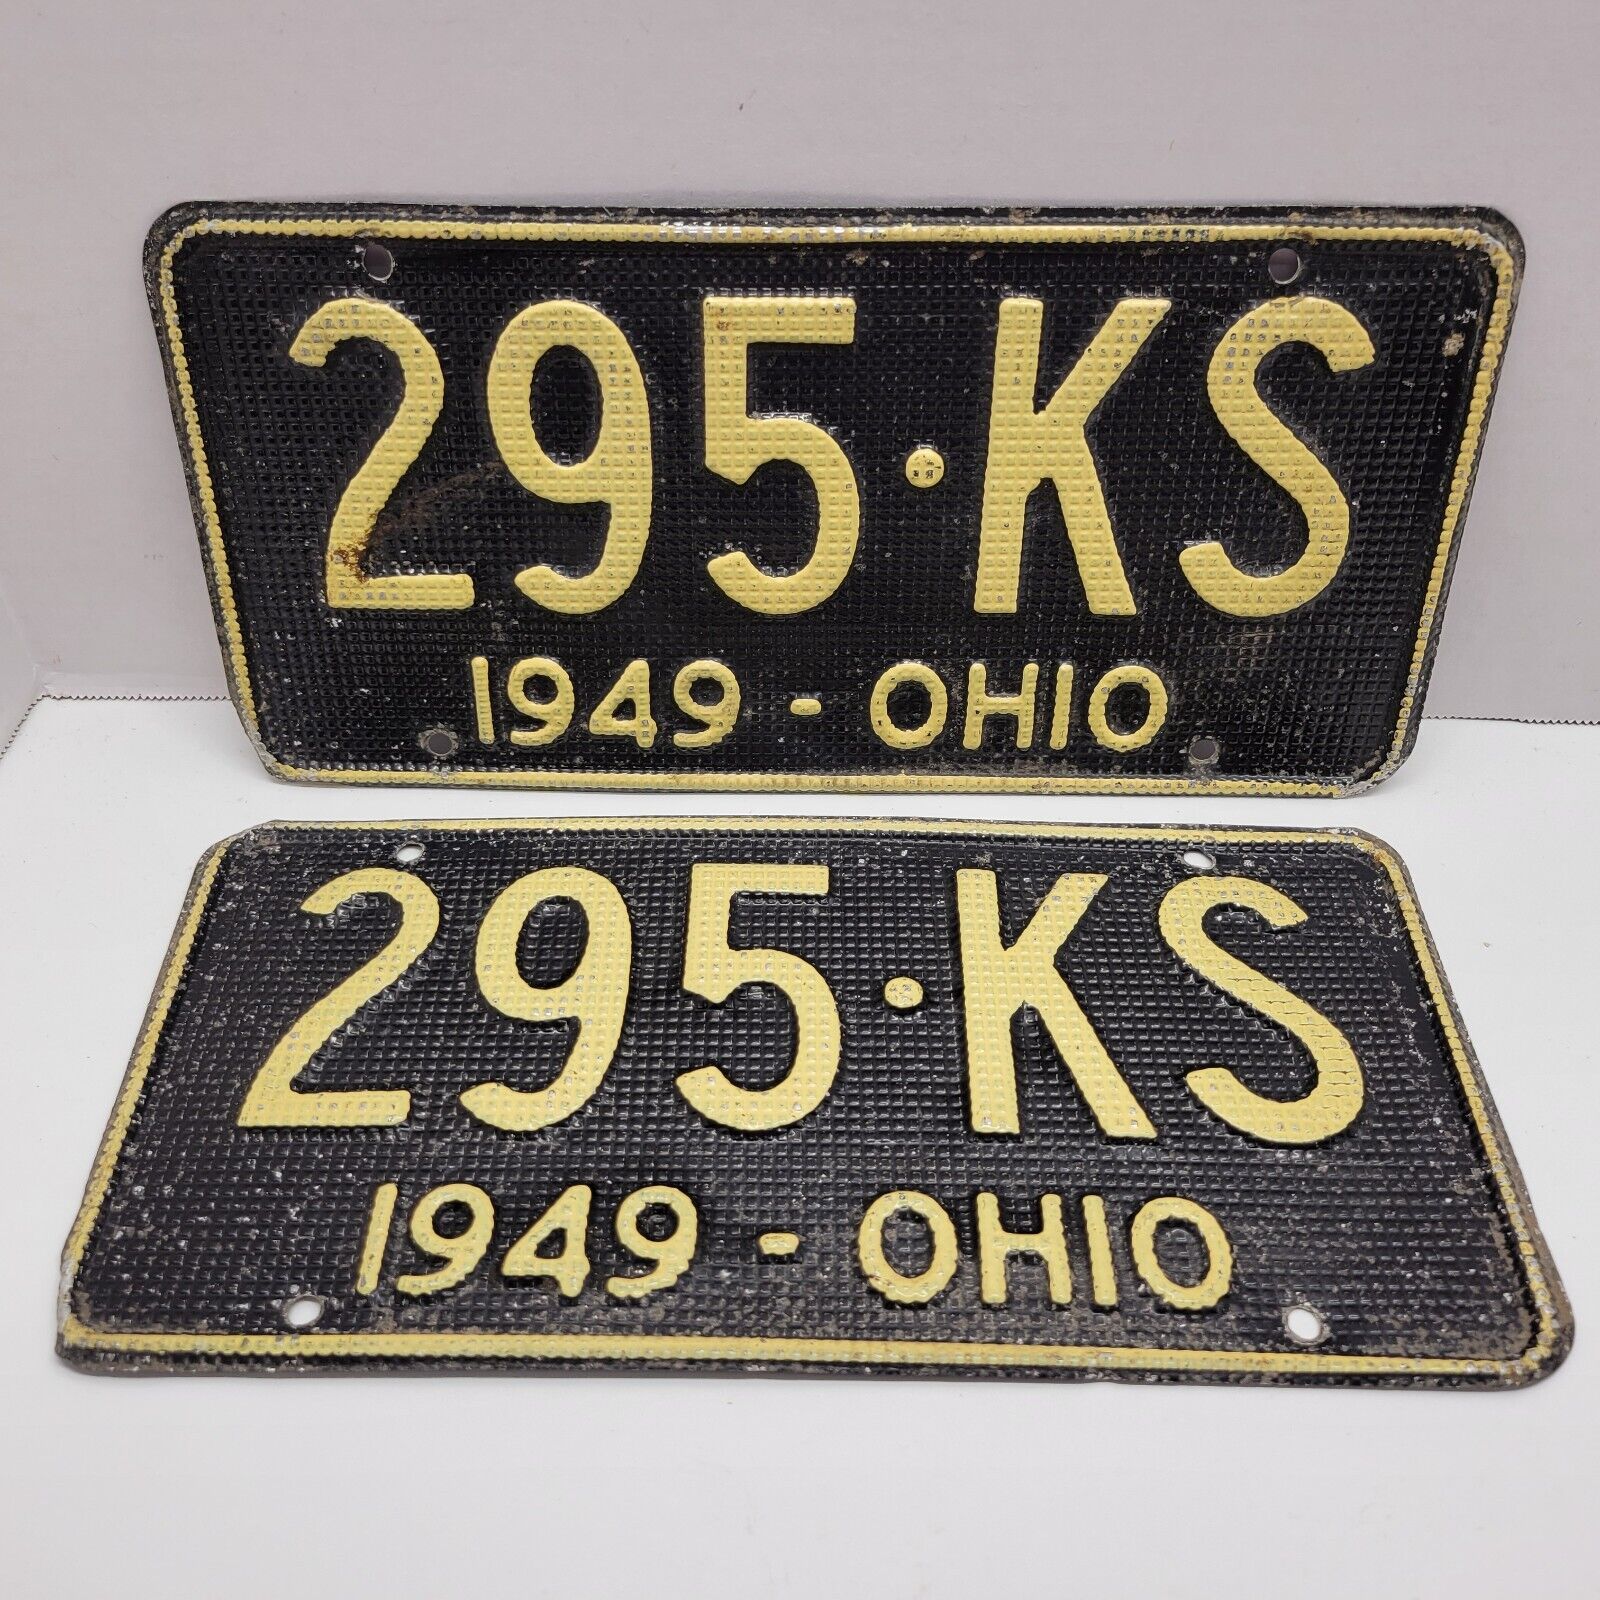 VTG 1949 Ohio License Plates Set Pair Tag 295 KS Aluminum Waffle Original Paint